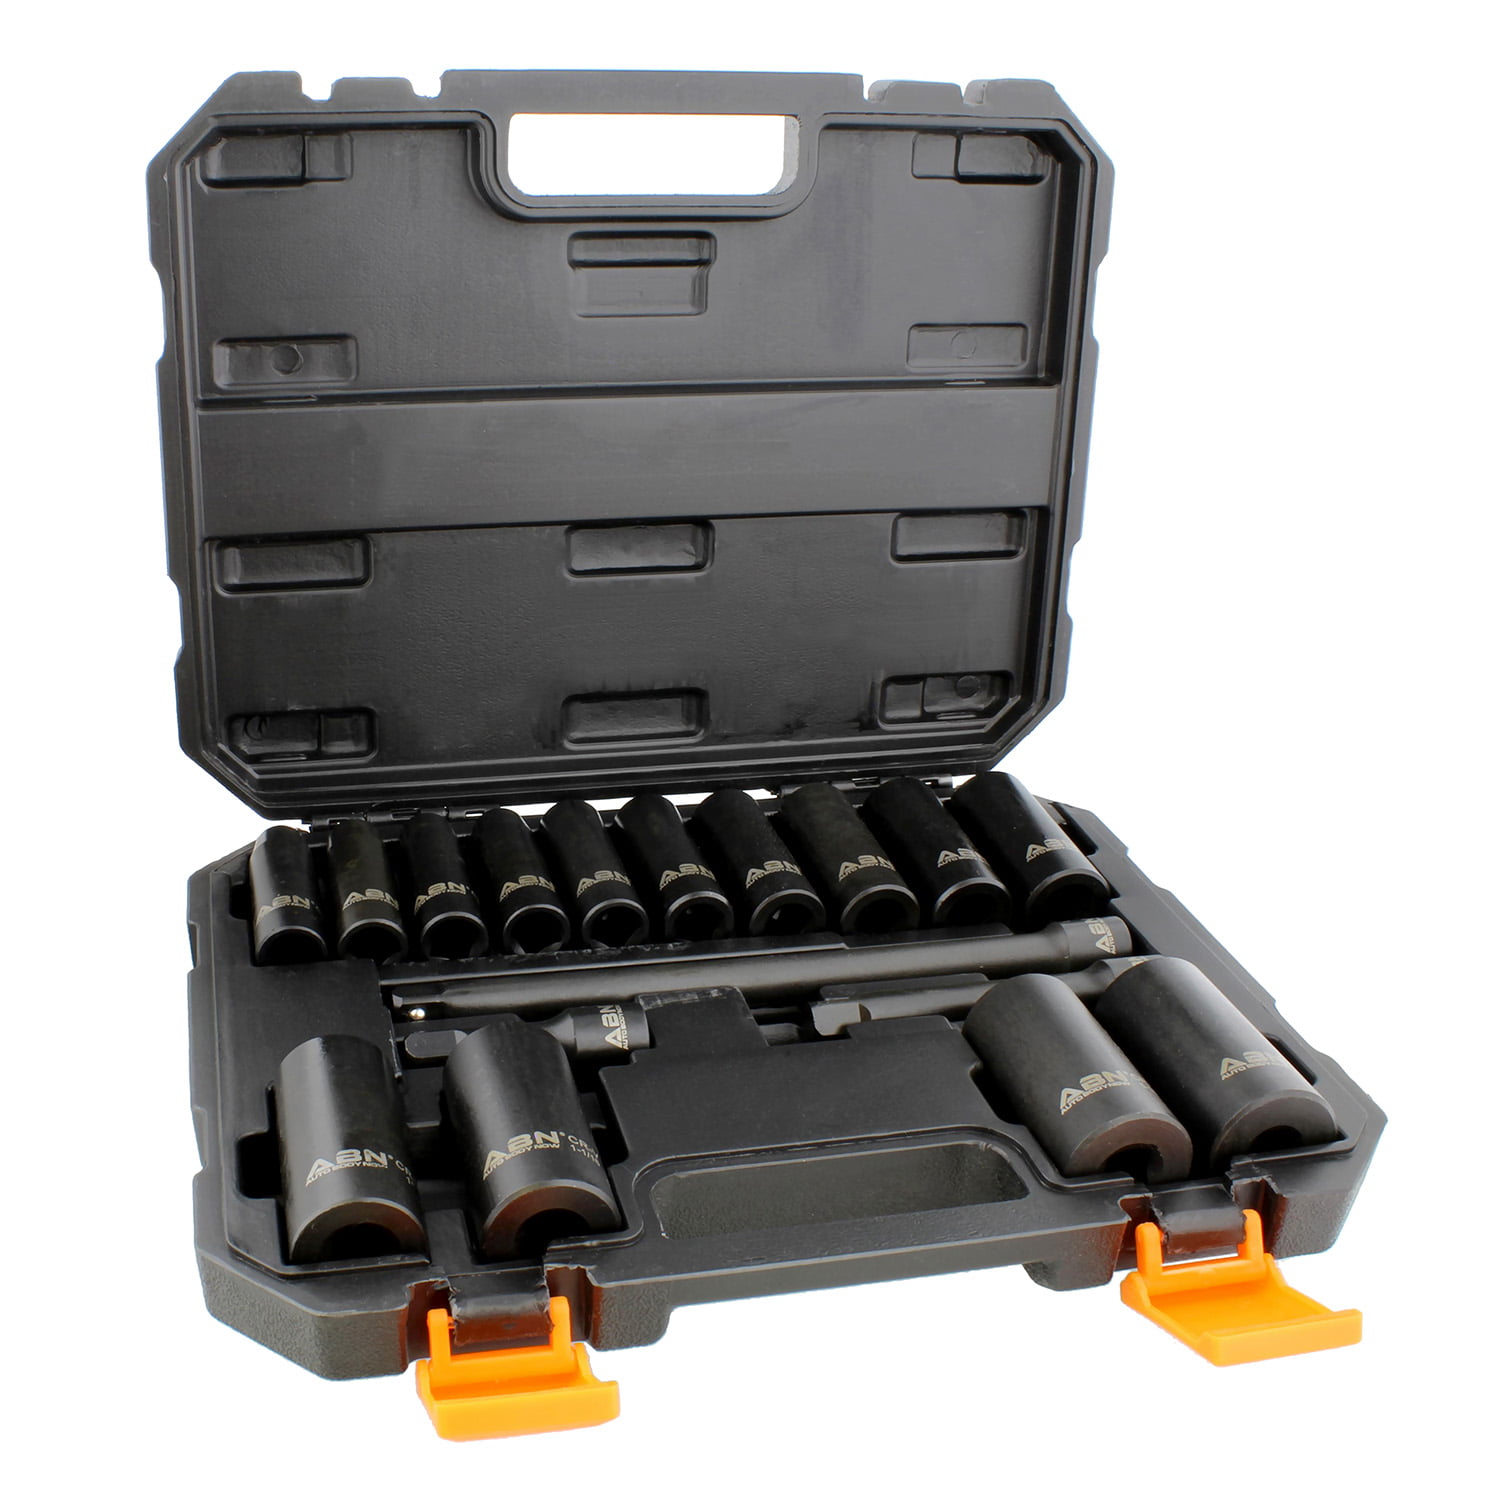 KATSU 1/2 Impact Deep Socket Set 10Pcs 10-24mm Drive Cr-Mo Steel for Automotive and DIY Tasks Carrying Case